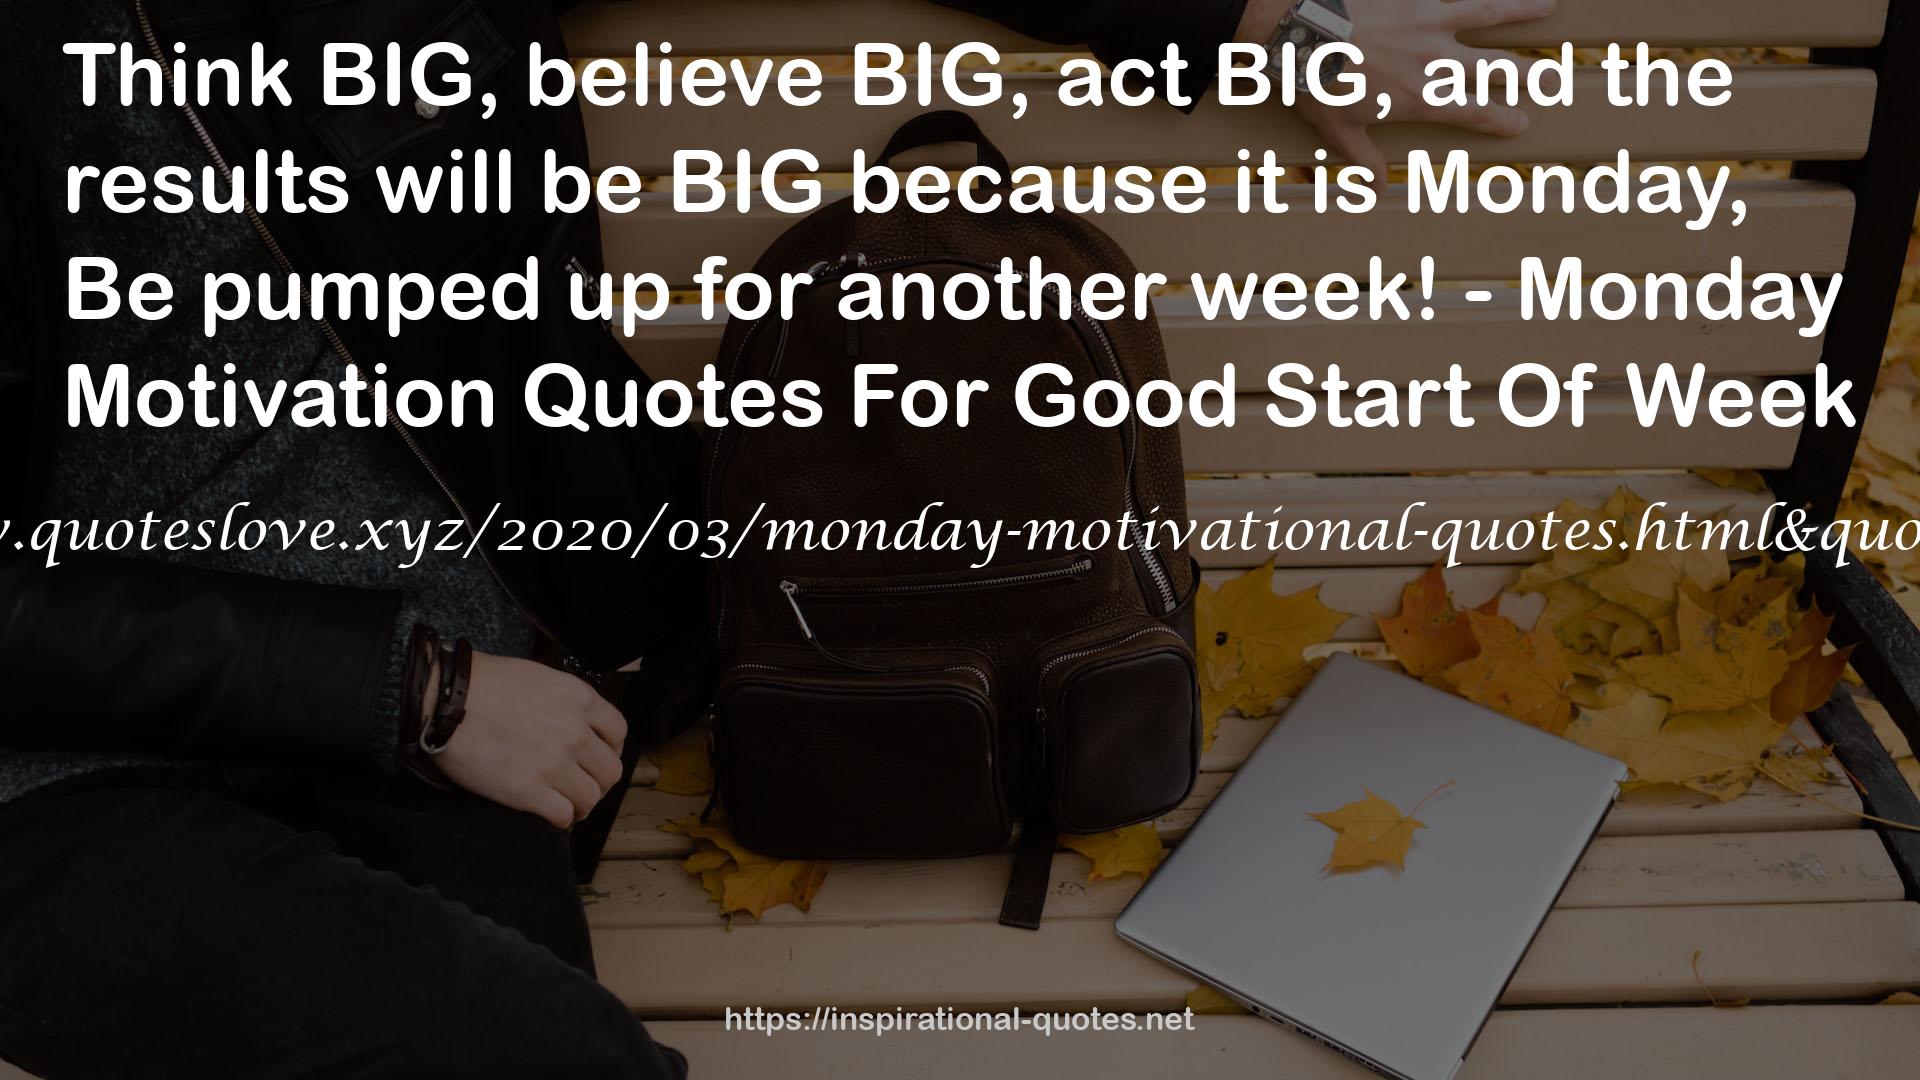 <a href="https://www.quoteslove.xyz/2020/03/monday-motivational-quotes.html">QuotesLove.xyz</a> QUOTES